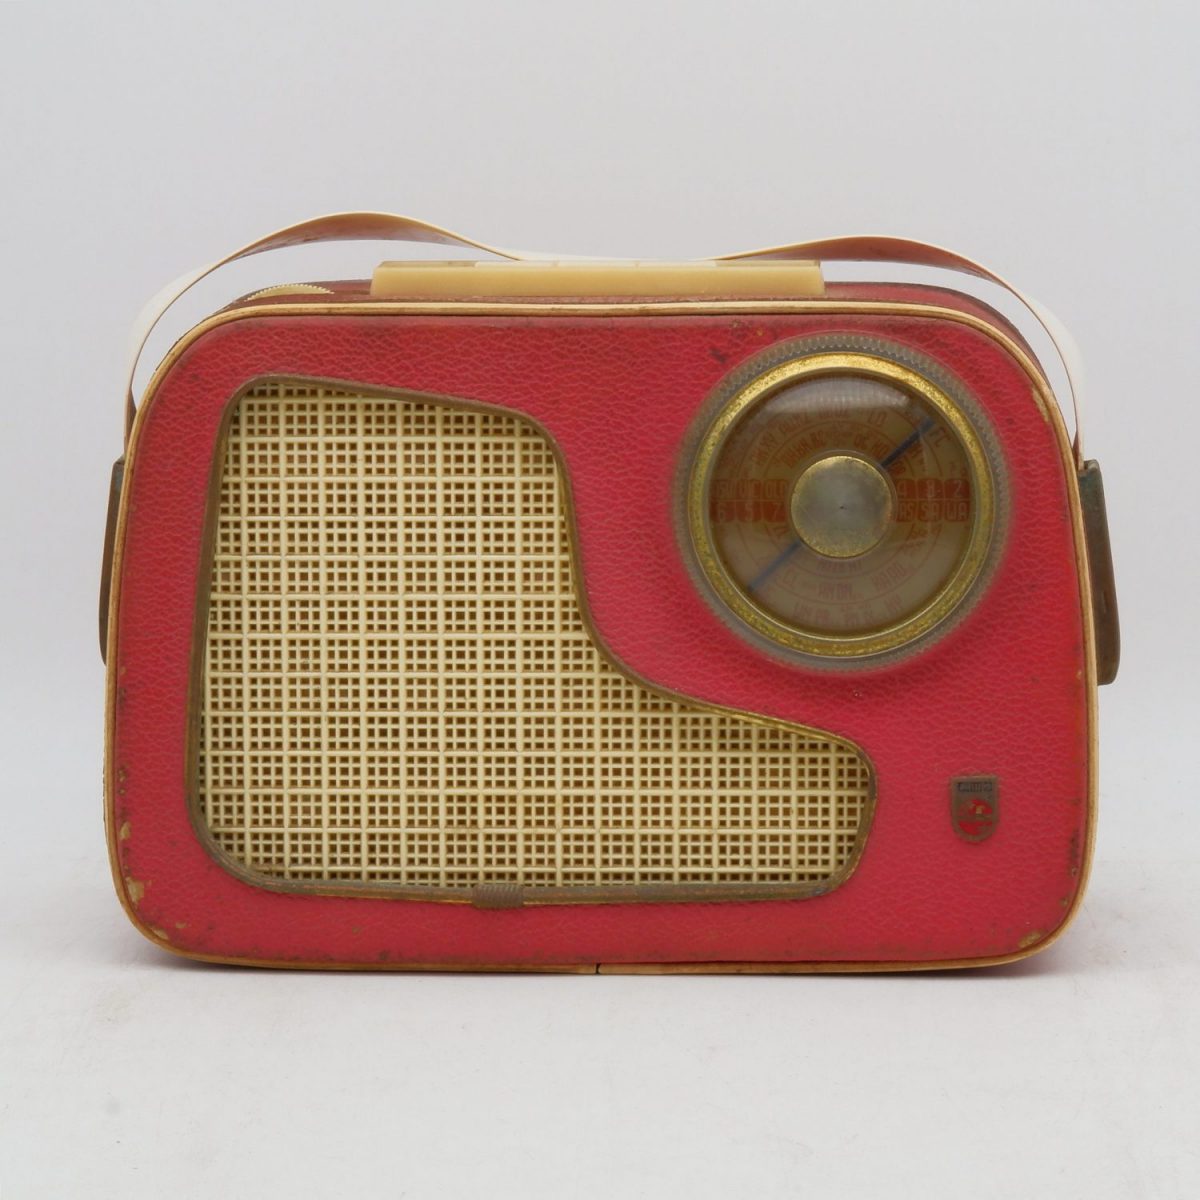 Portable radio’s